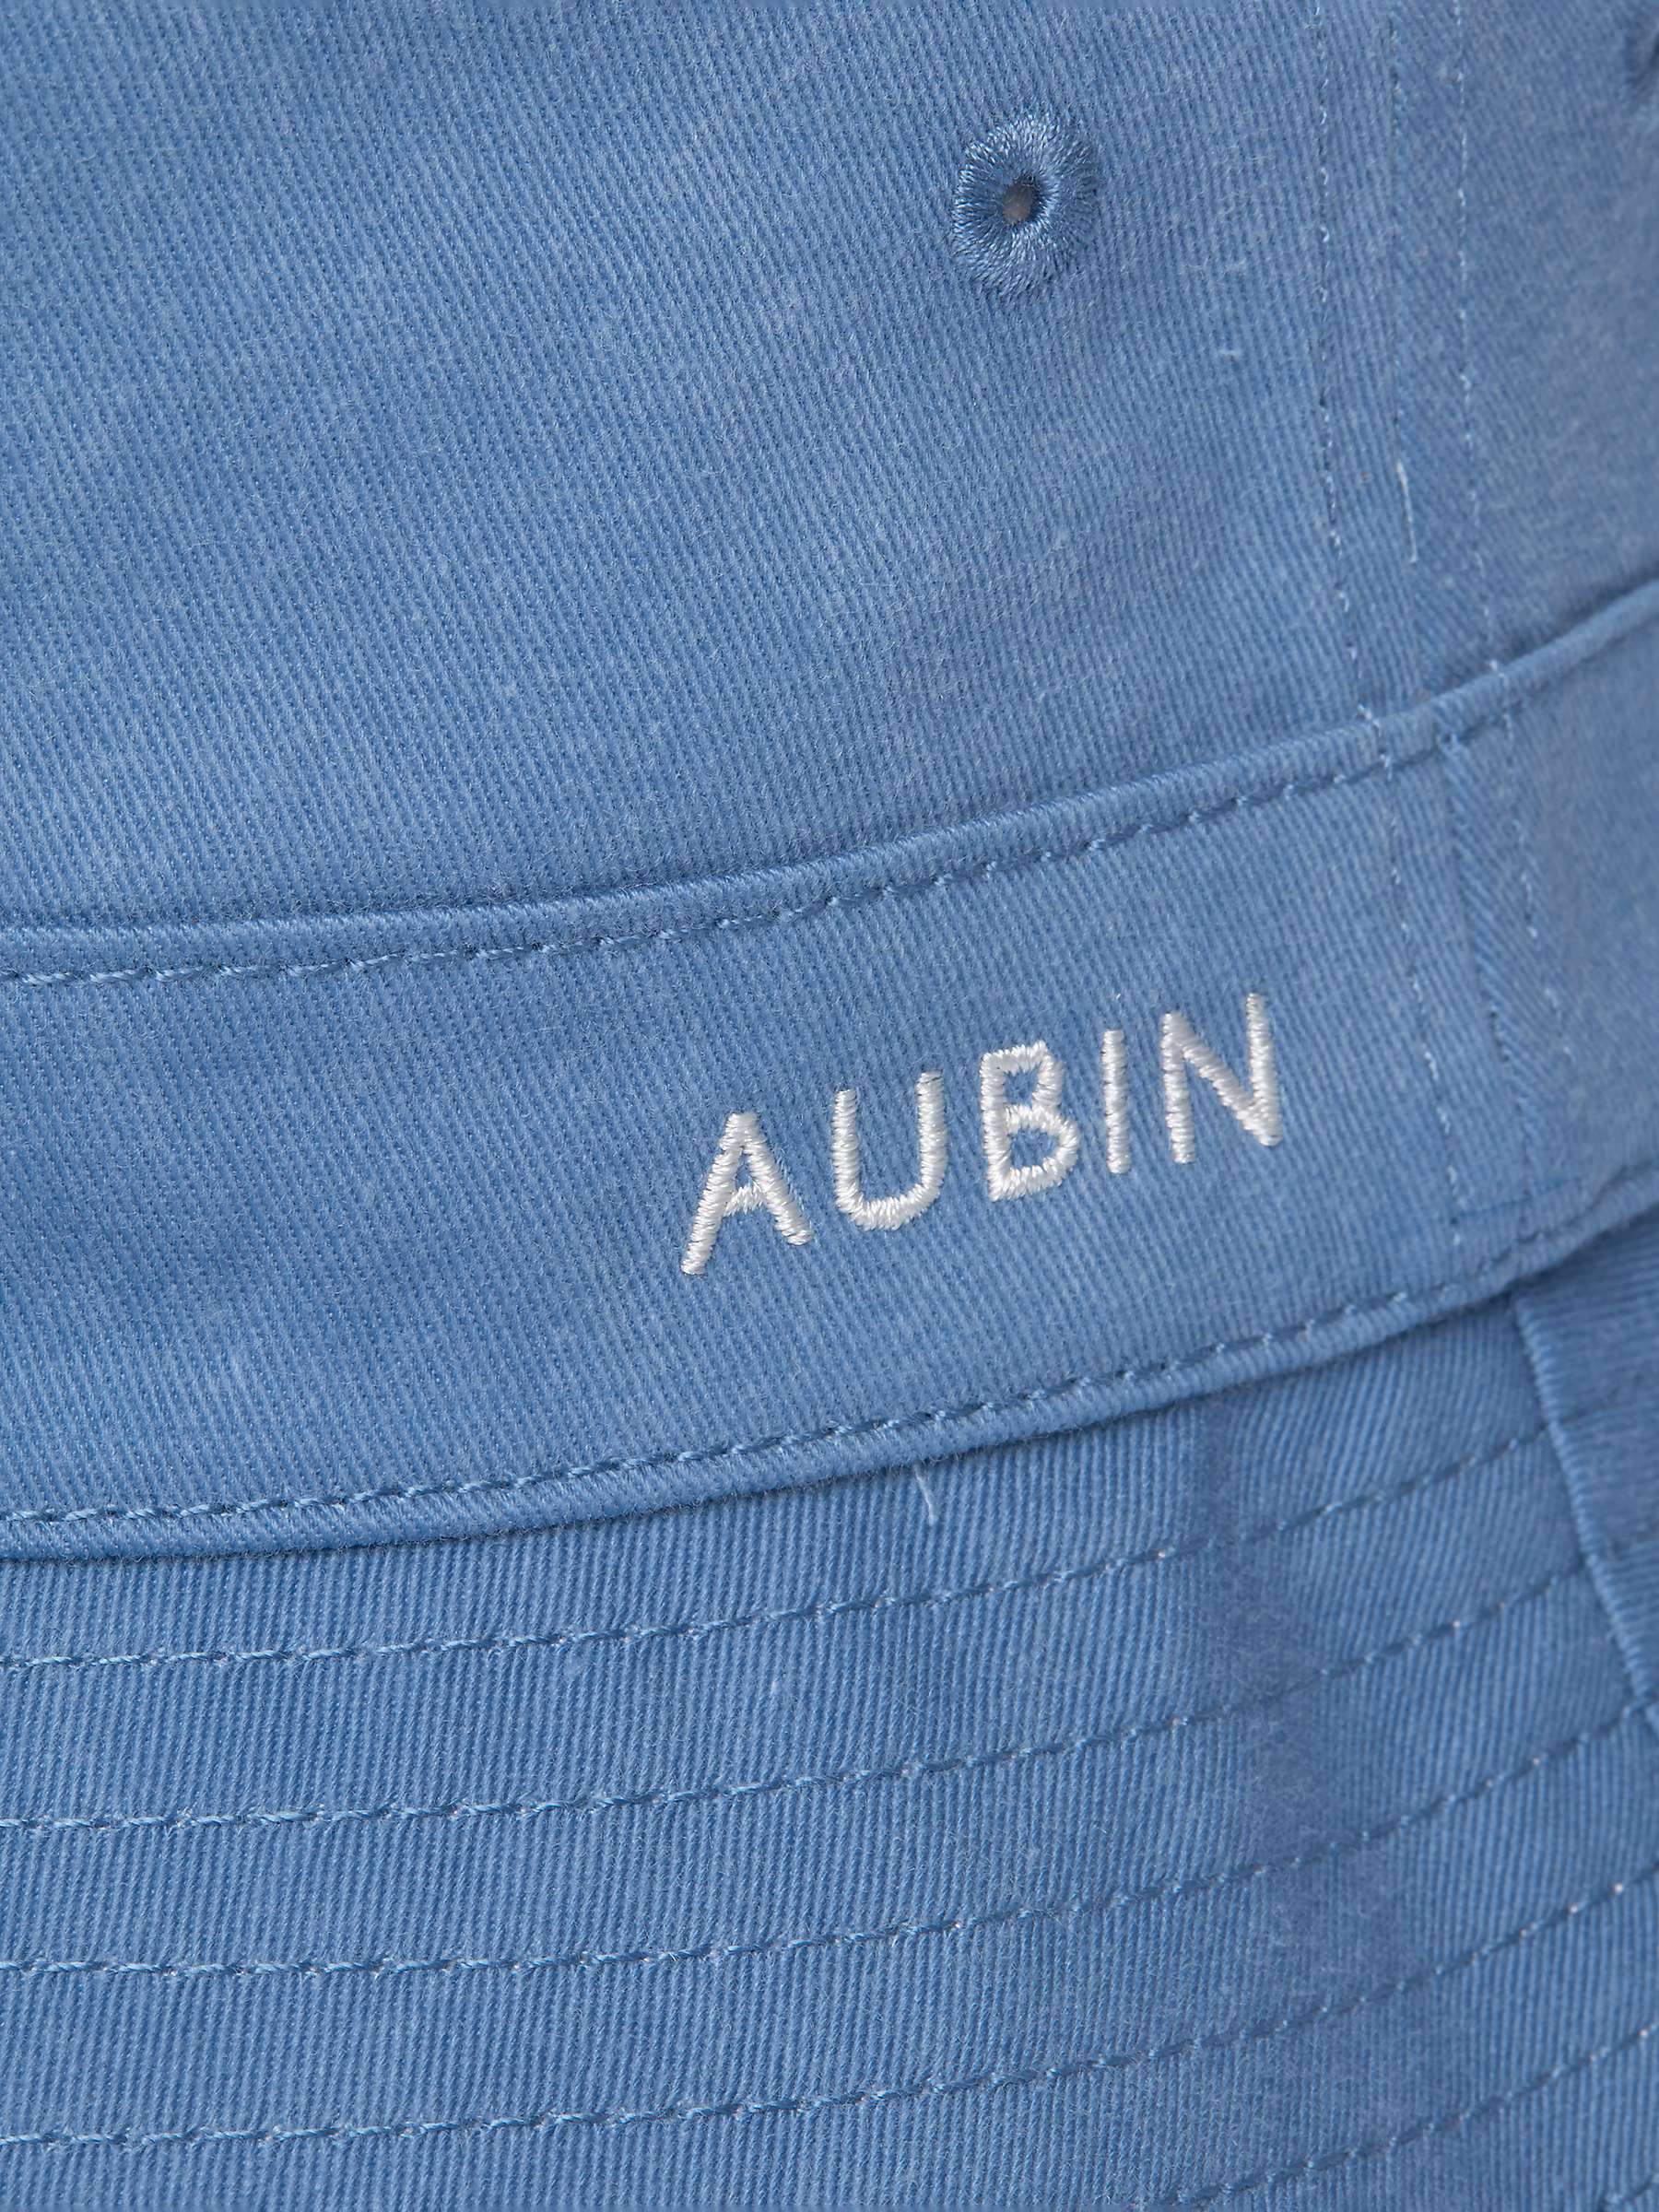 Buy Aubin Farthing Reversible Bucket Hat Online at johnlewis.com